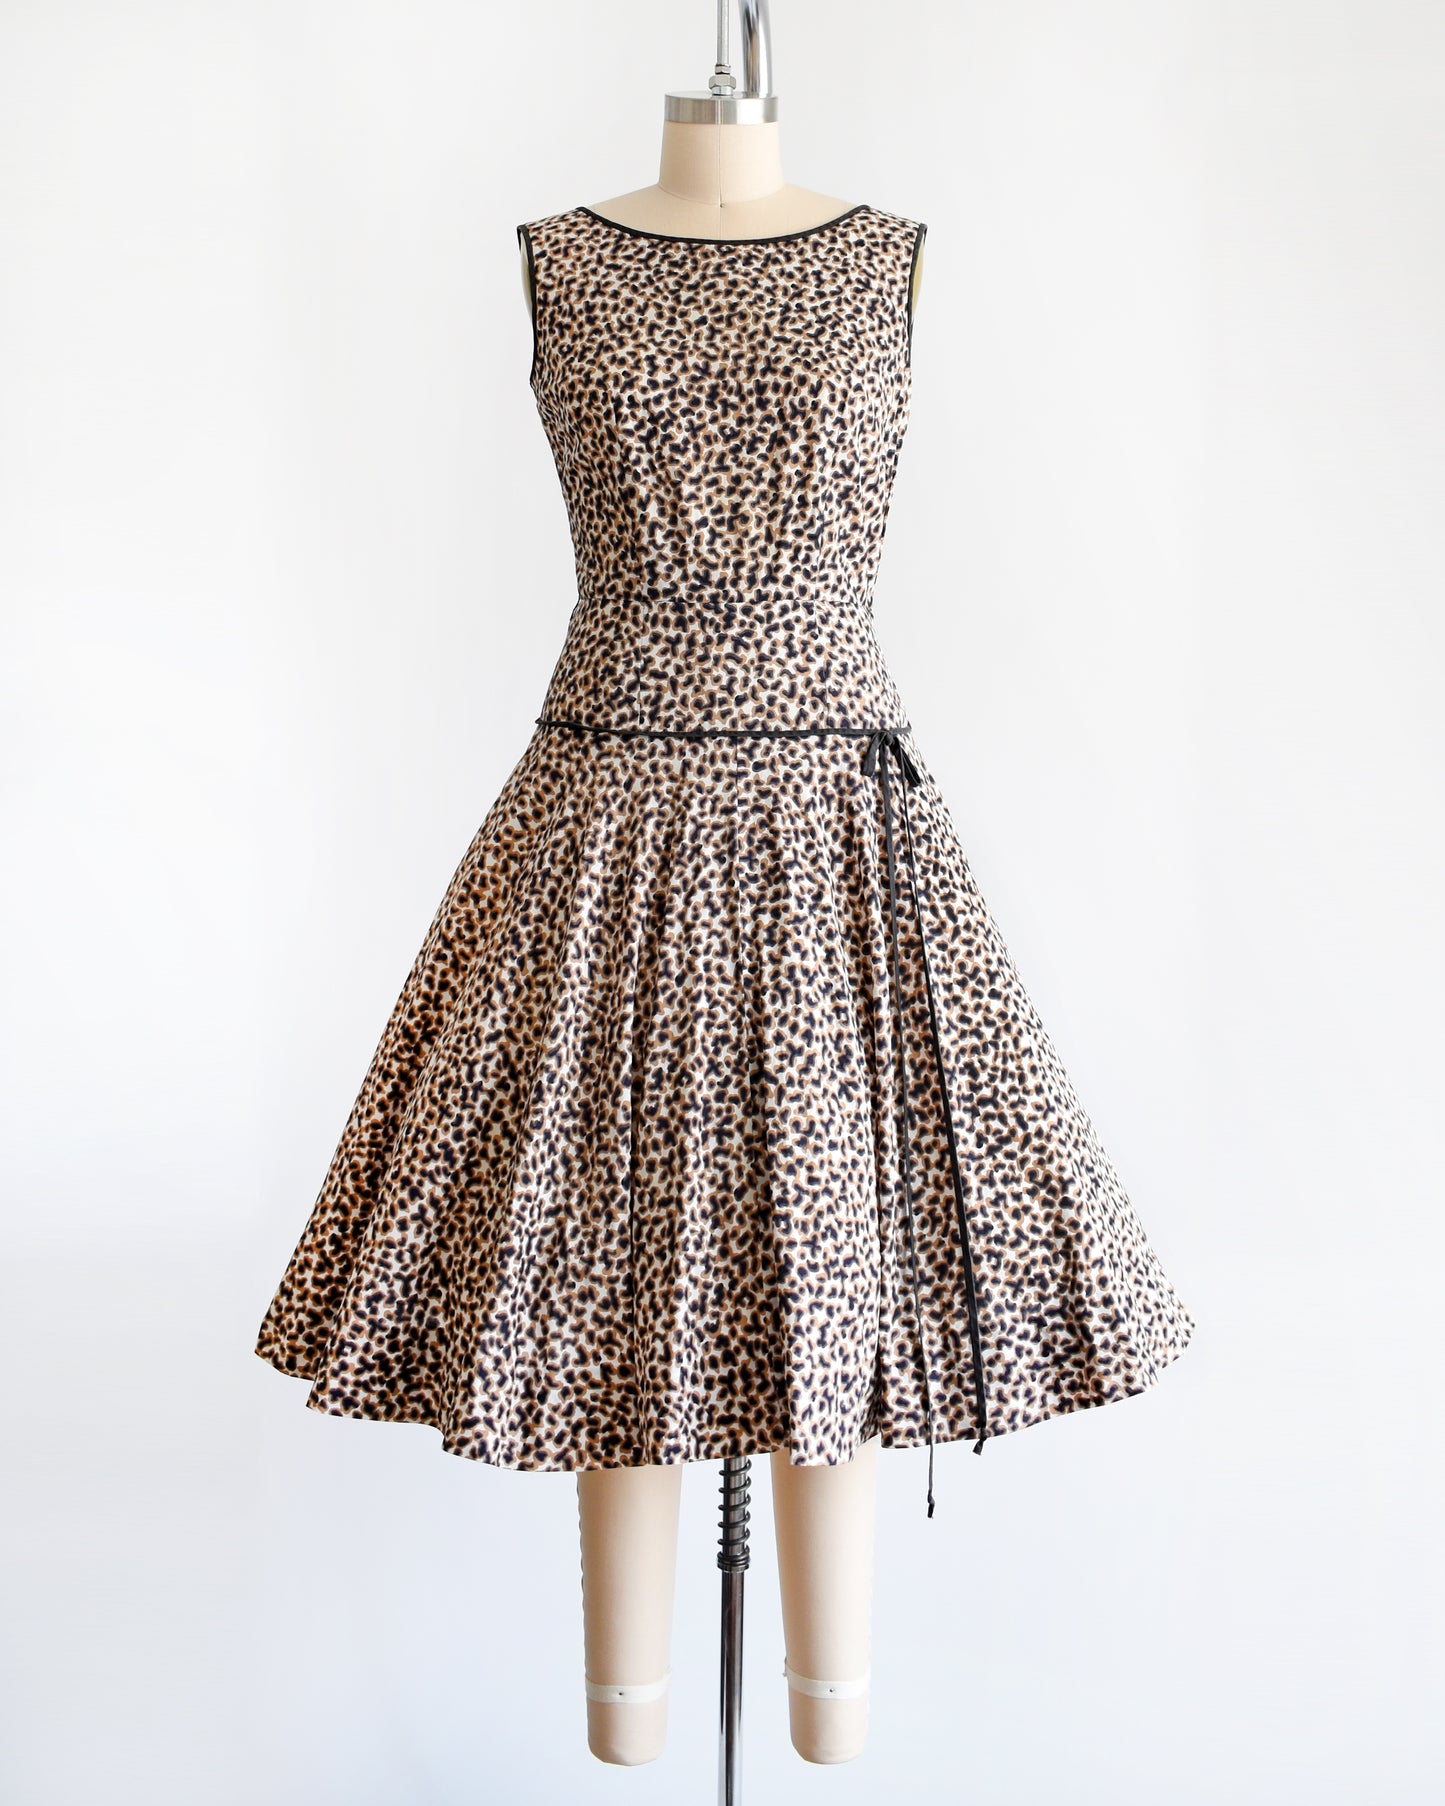 A vintage 1950s leopard print dress with black trim on a dress form.